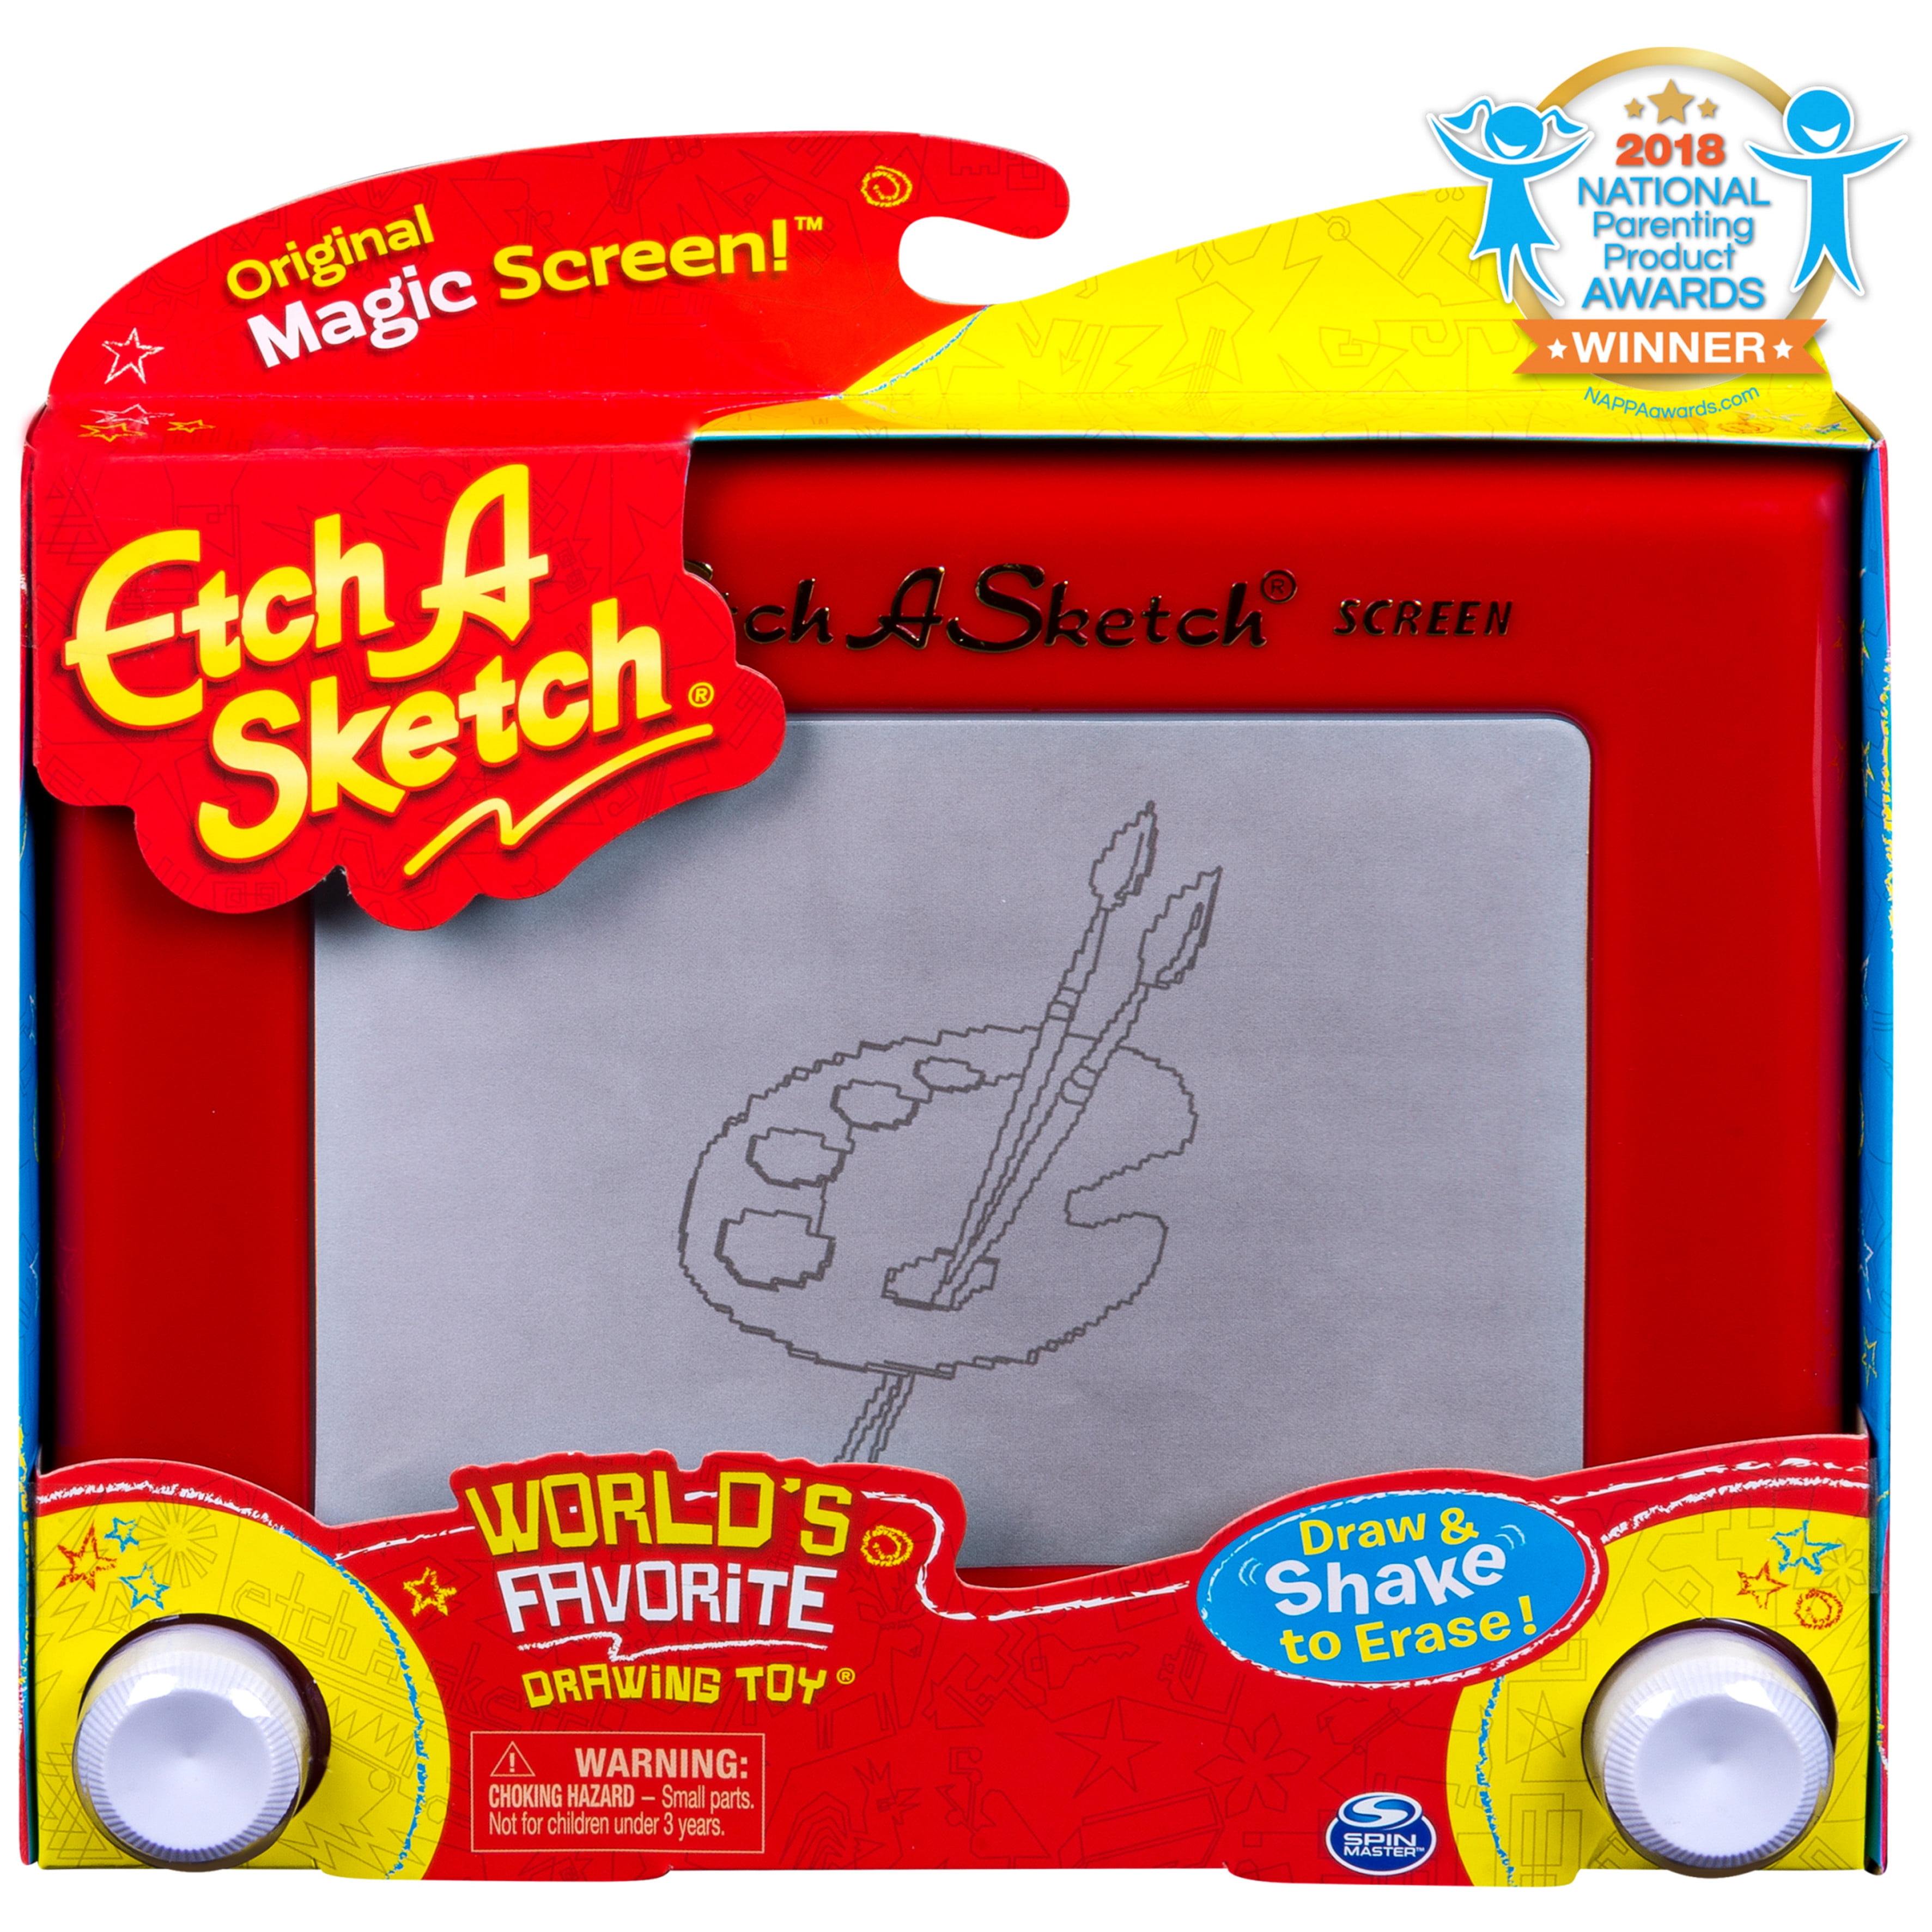 I fully cleared a etch a sketch : r/etchasketch